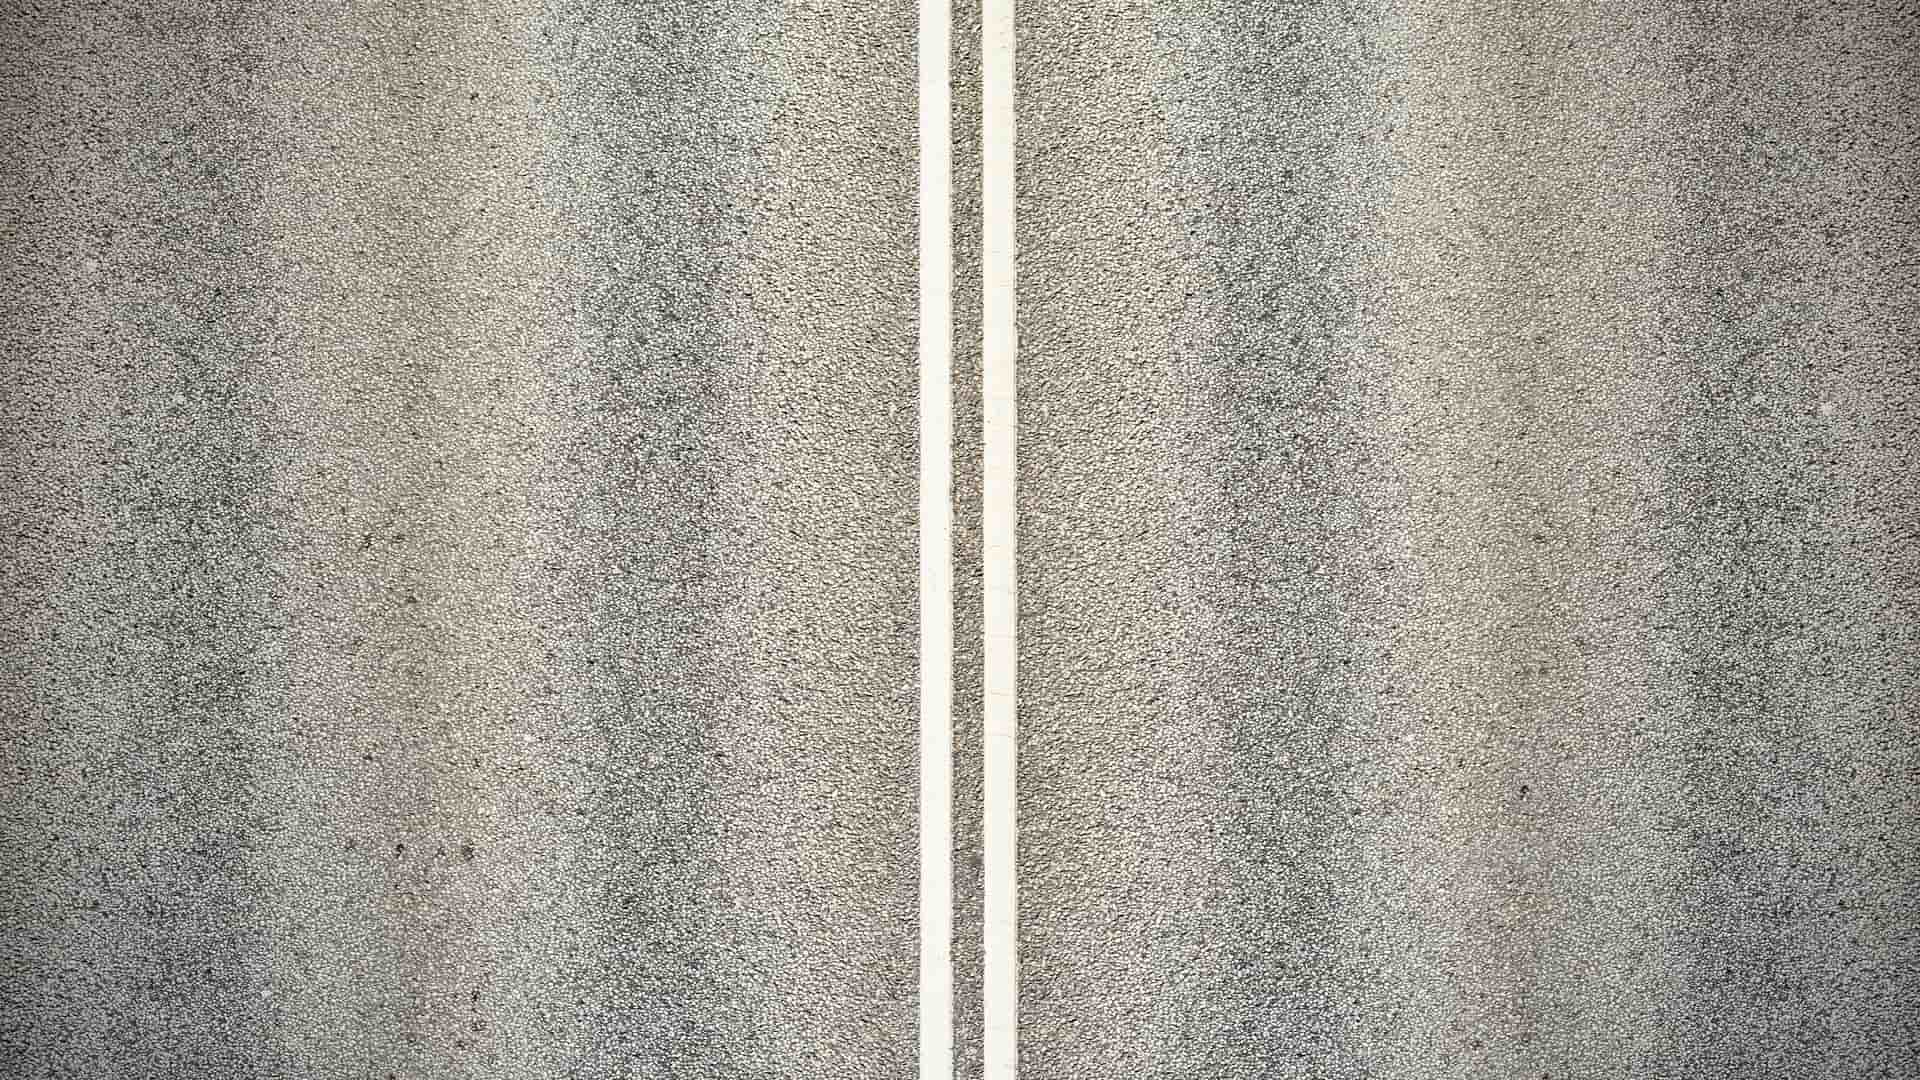 Doble línea recta de carretera simboliza depósitos plazo fijo